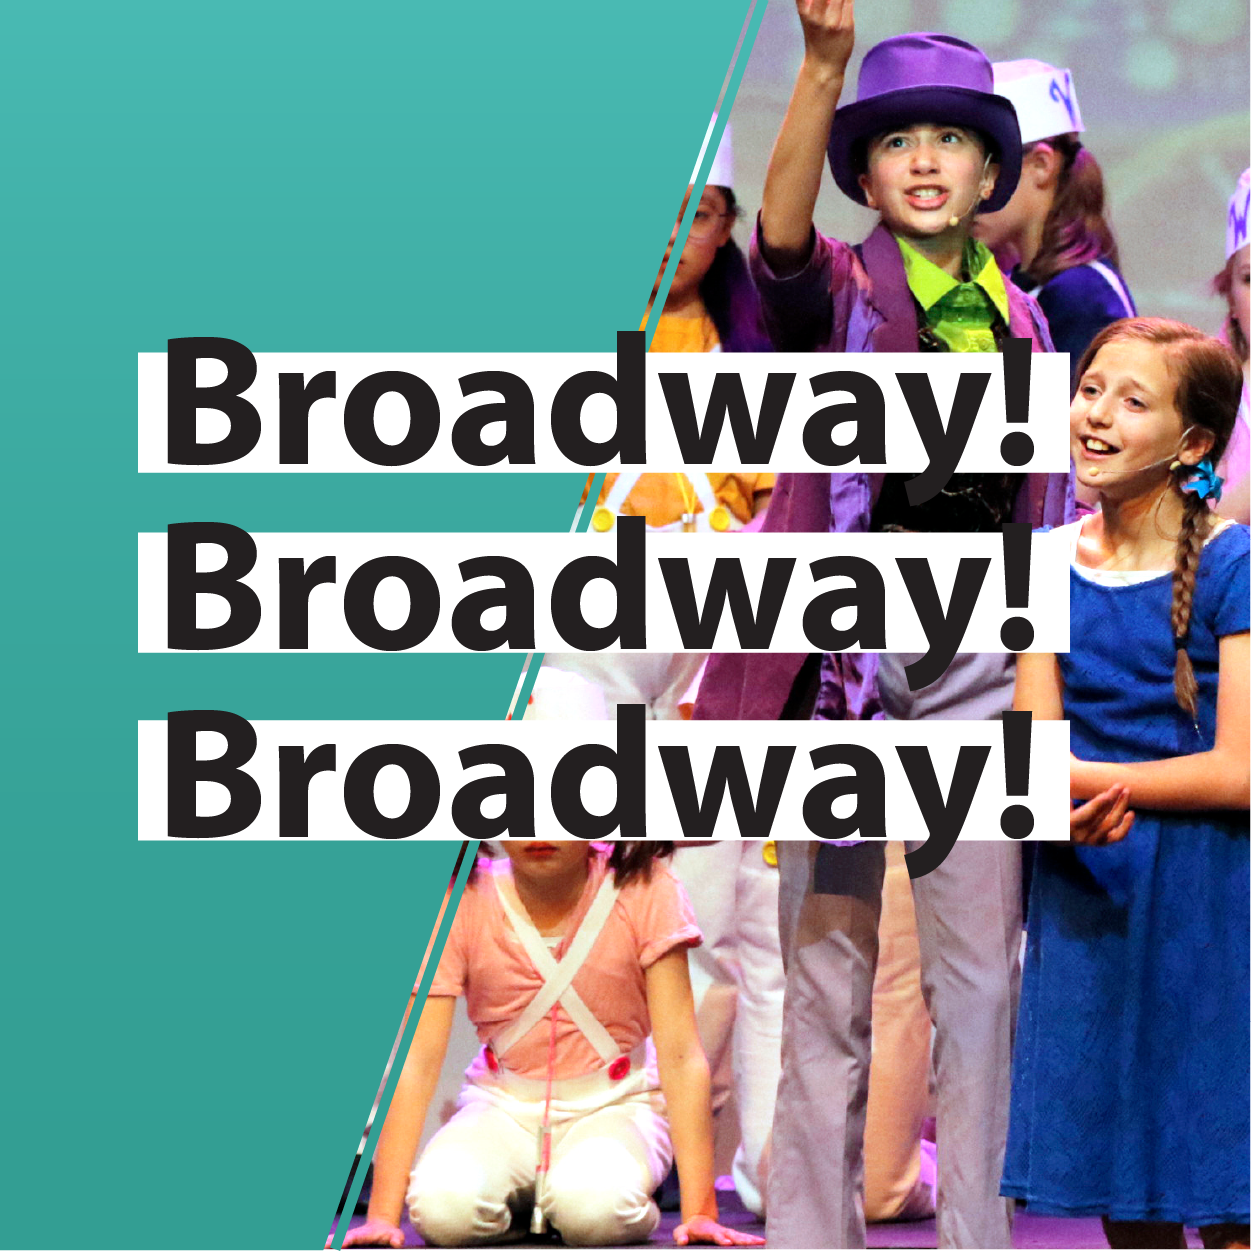 Broadway! Broadway! Broadway!